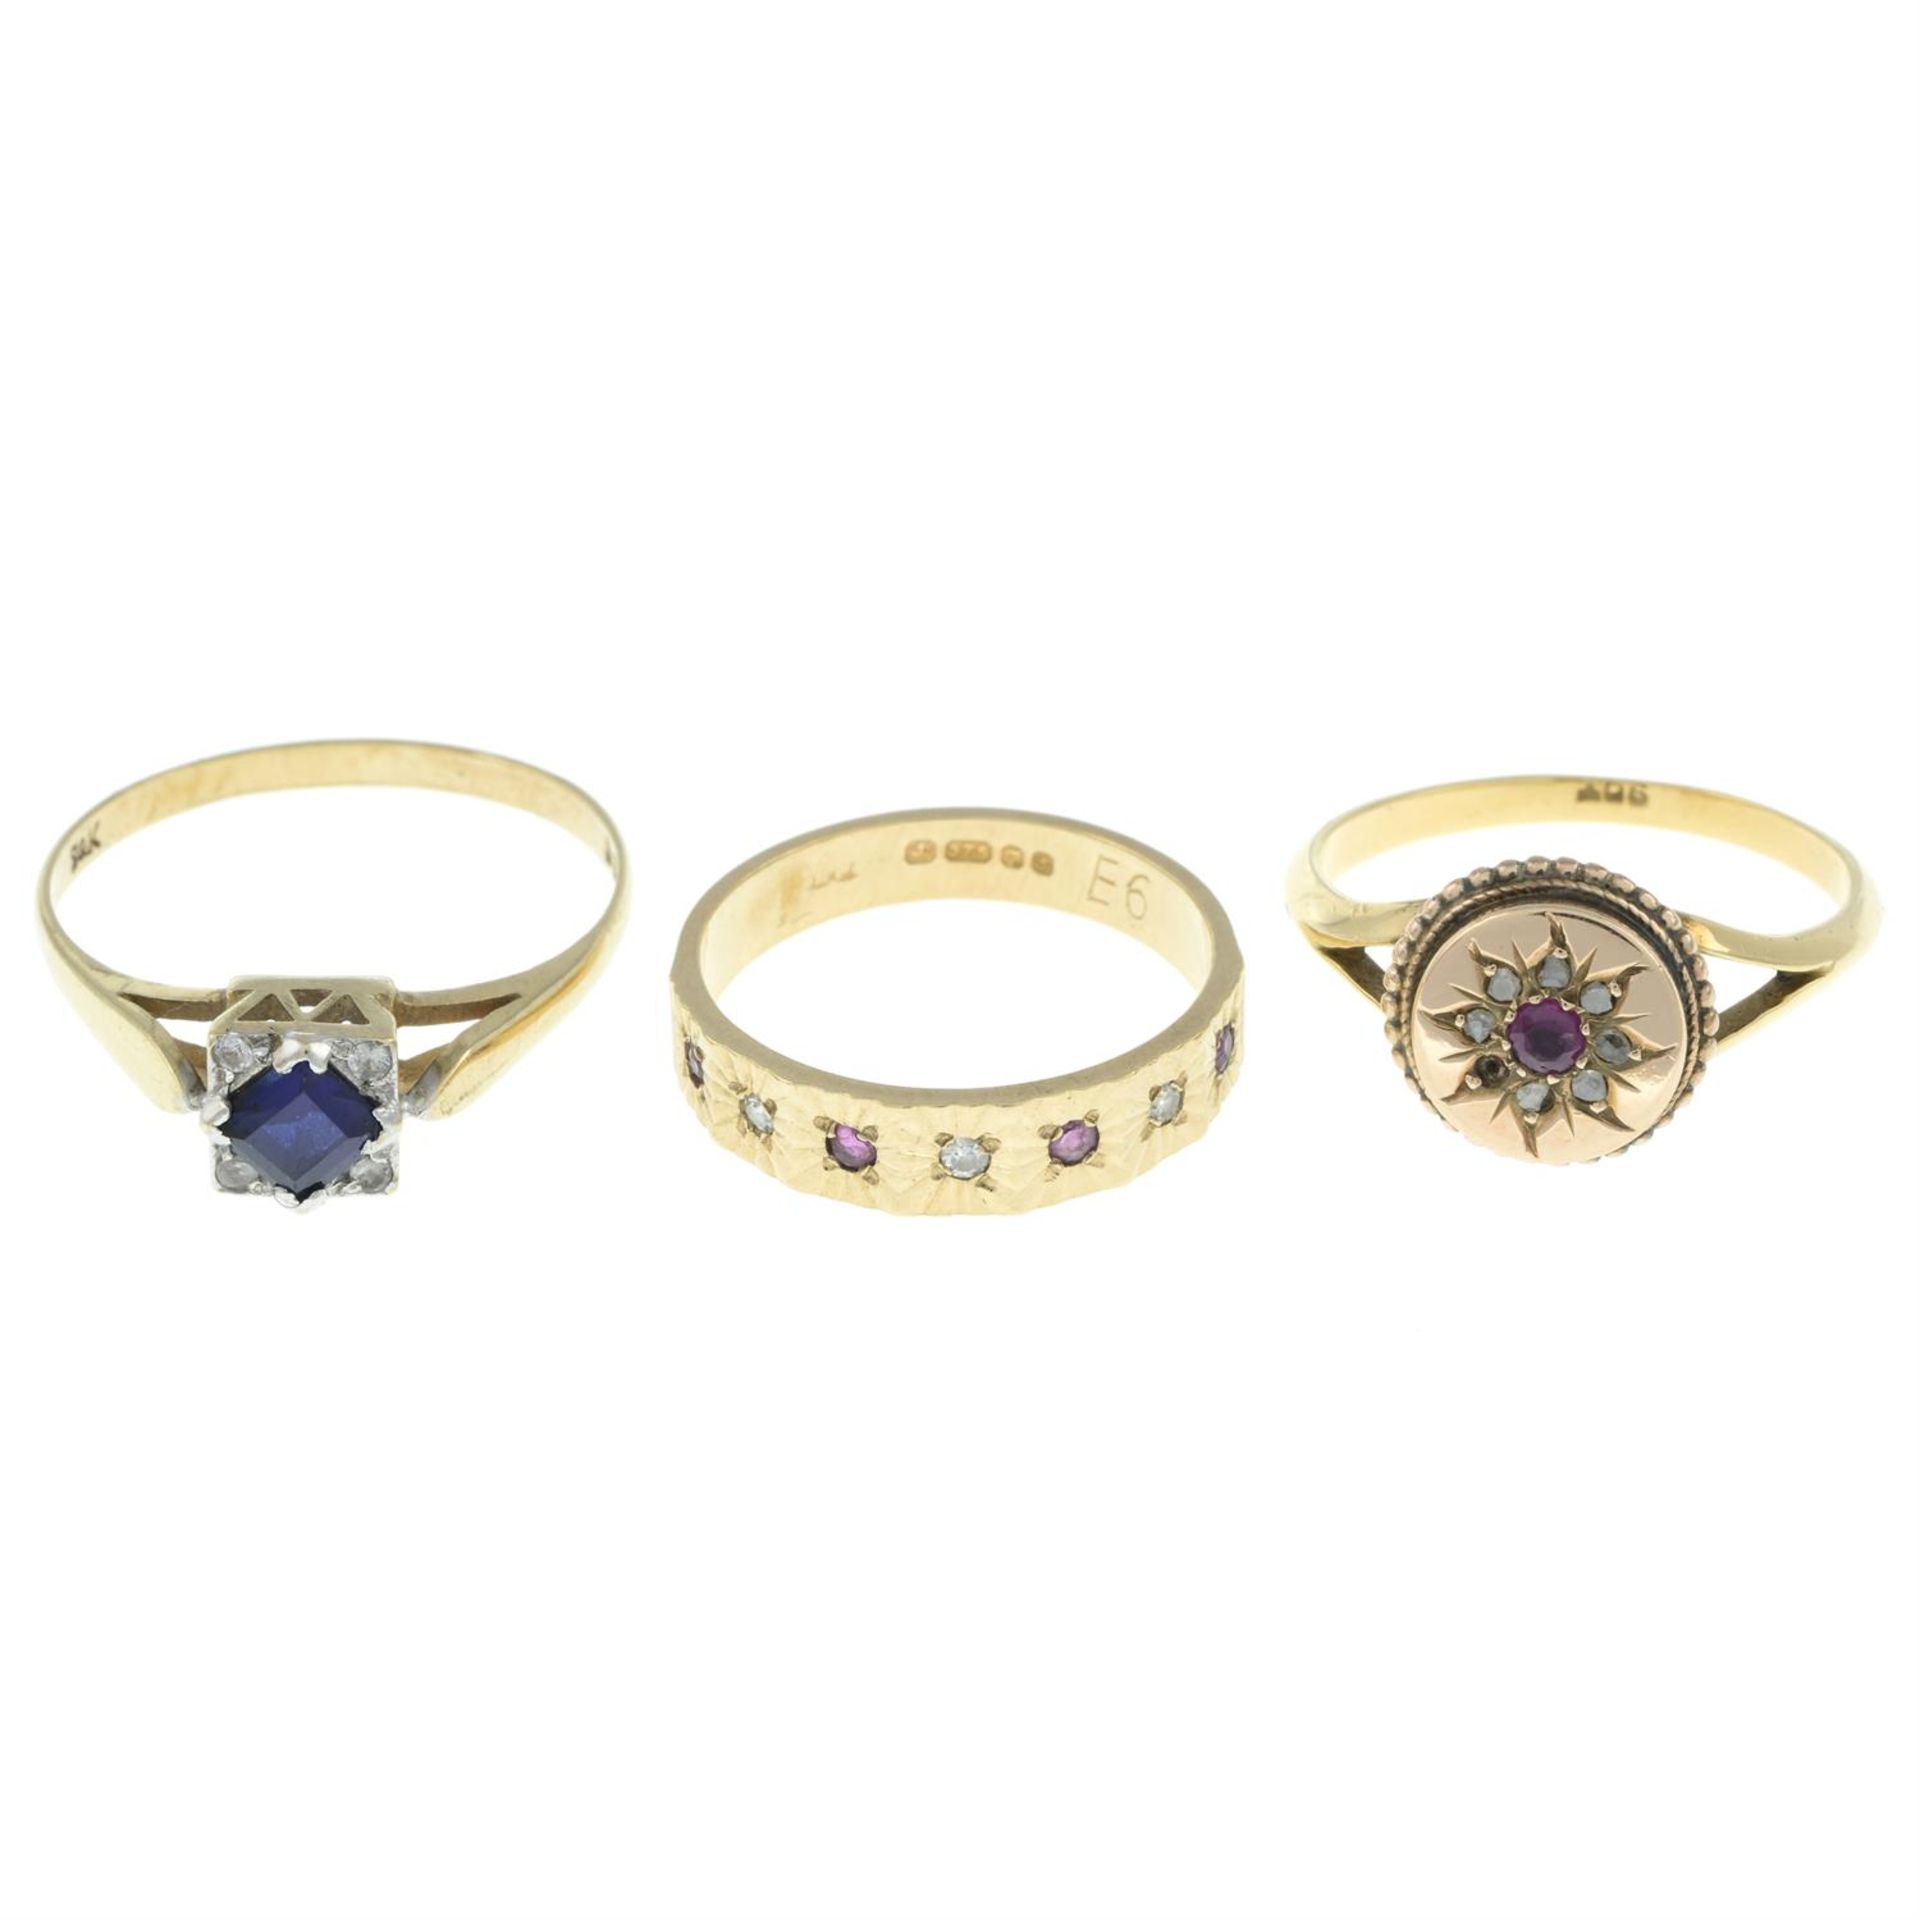 Three gem rings